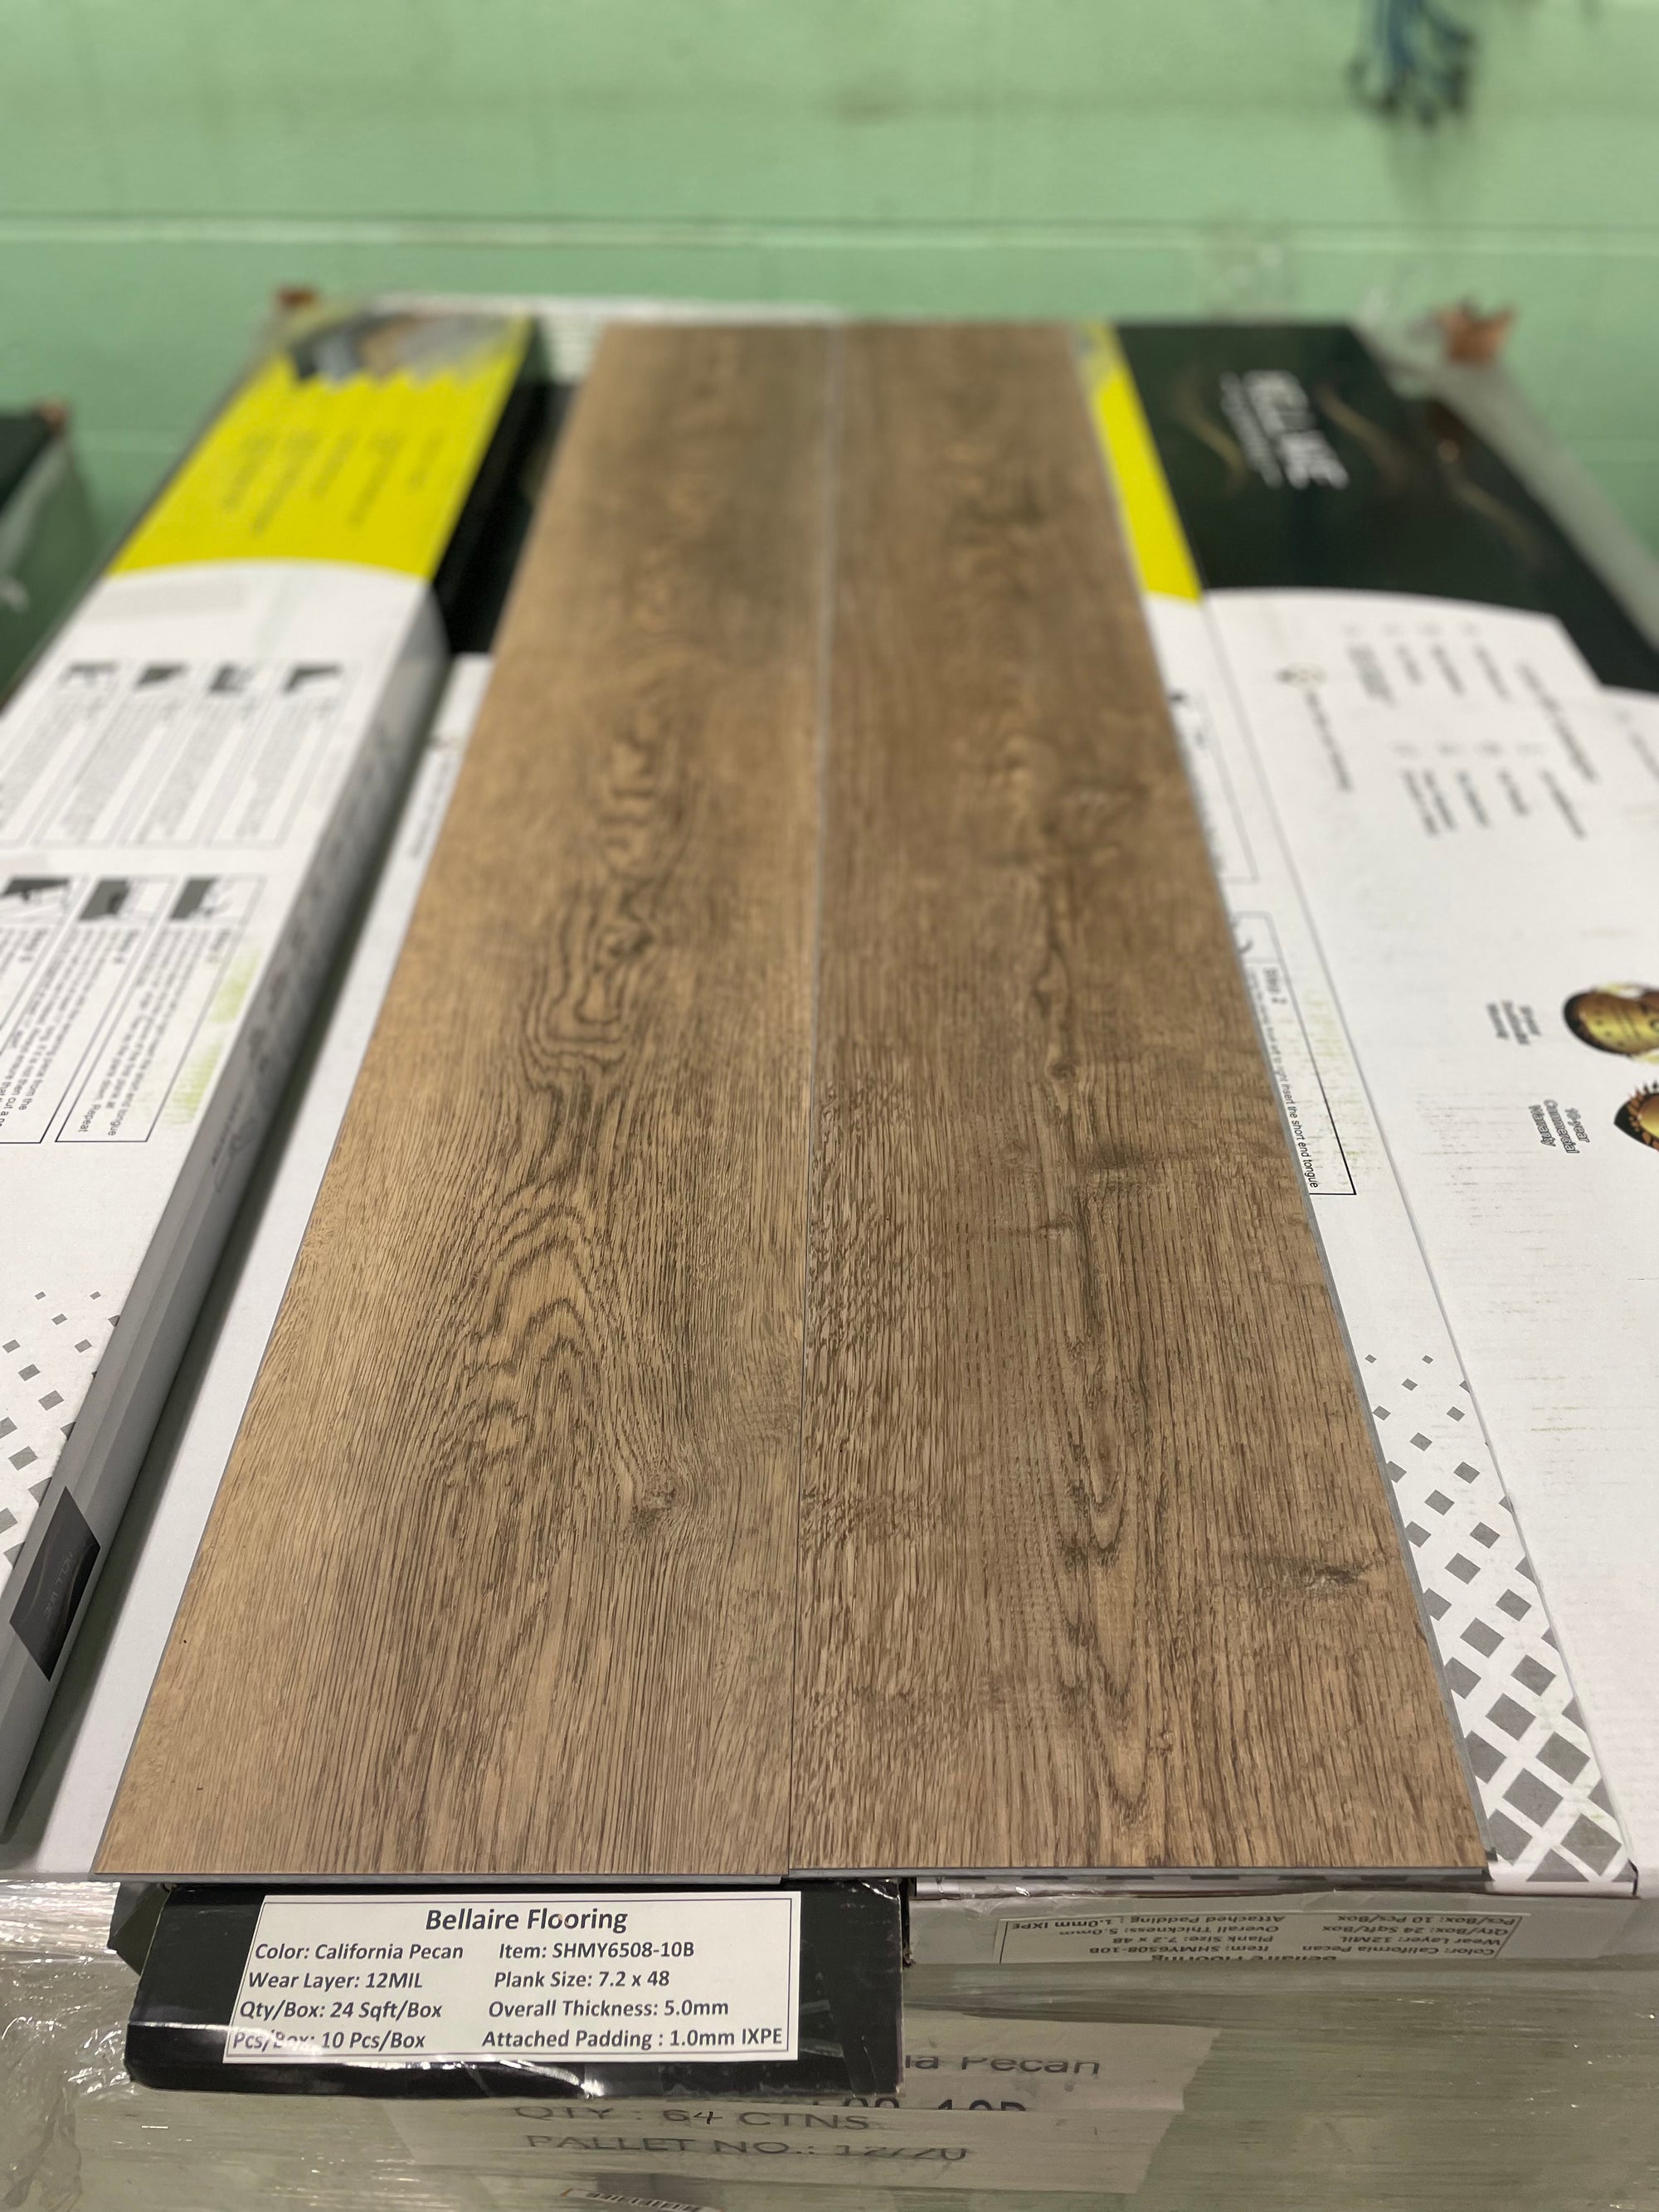 Bellaire 12 mil Luxury Vinyl Plank Flooring - California Pecan $2.19/sqft